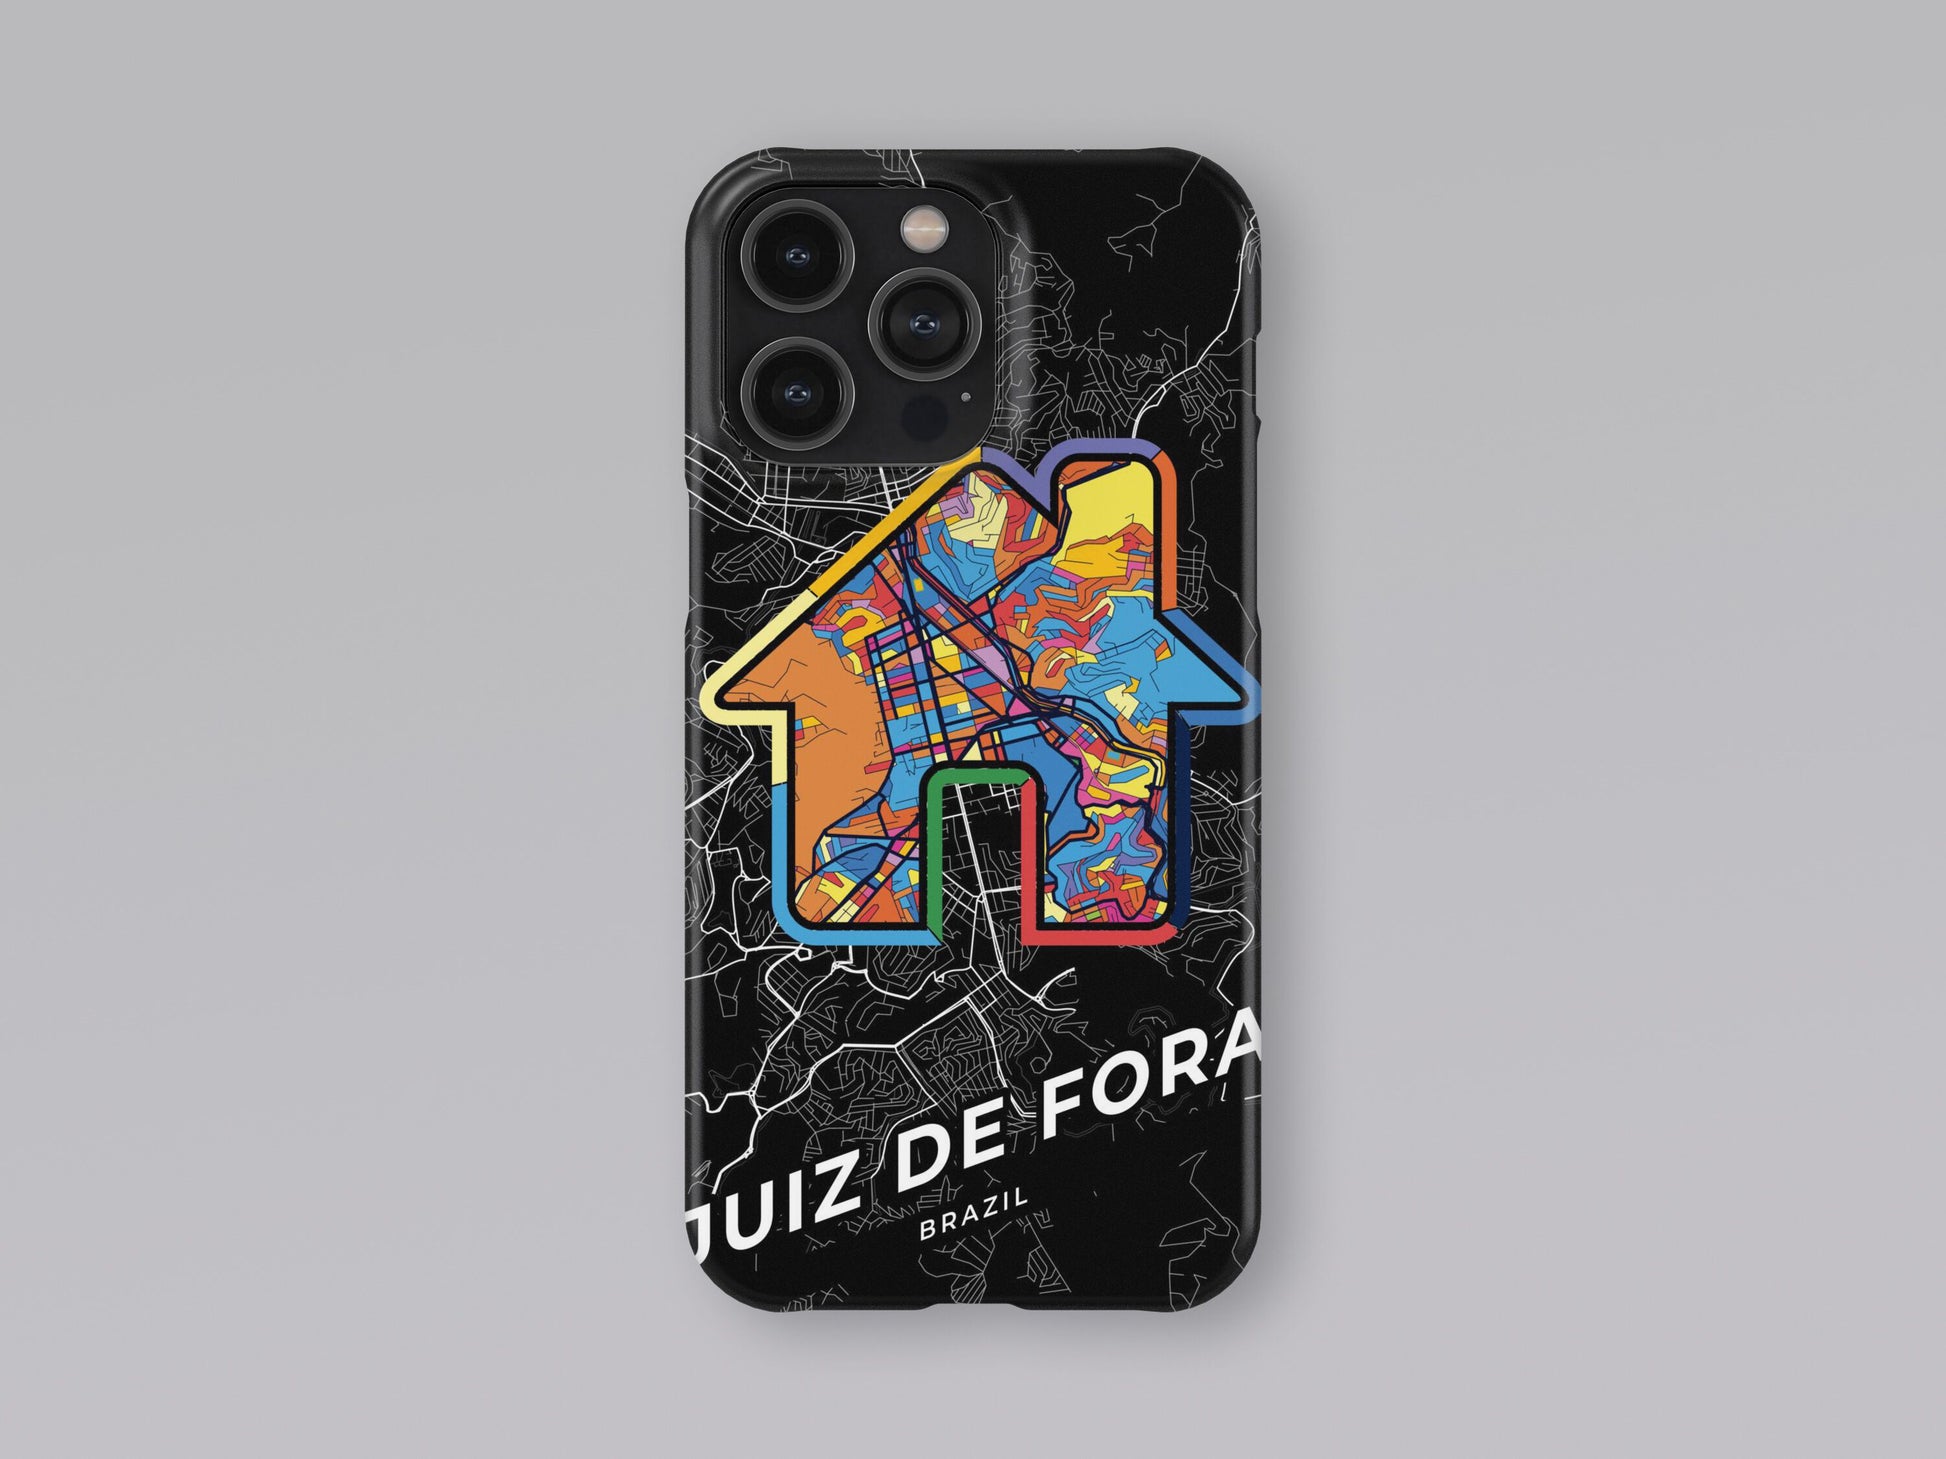 Juiz De Fora Brazil slim phone case with colorful icon. Birthday, wedding or housewarming gift. Couple match cases. 3